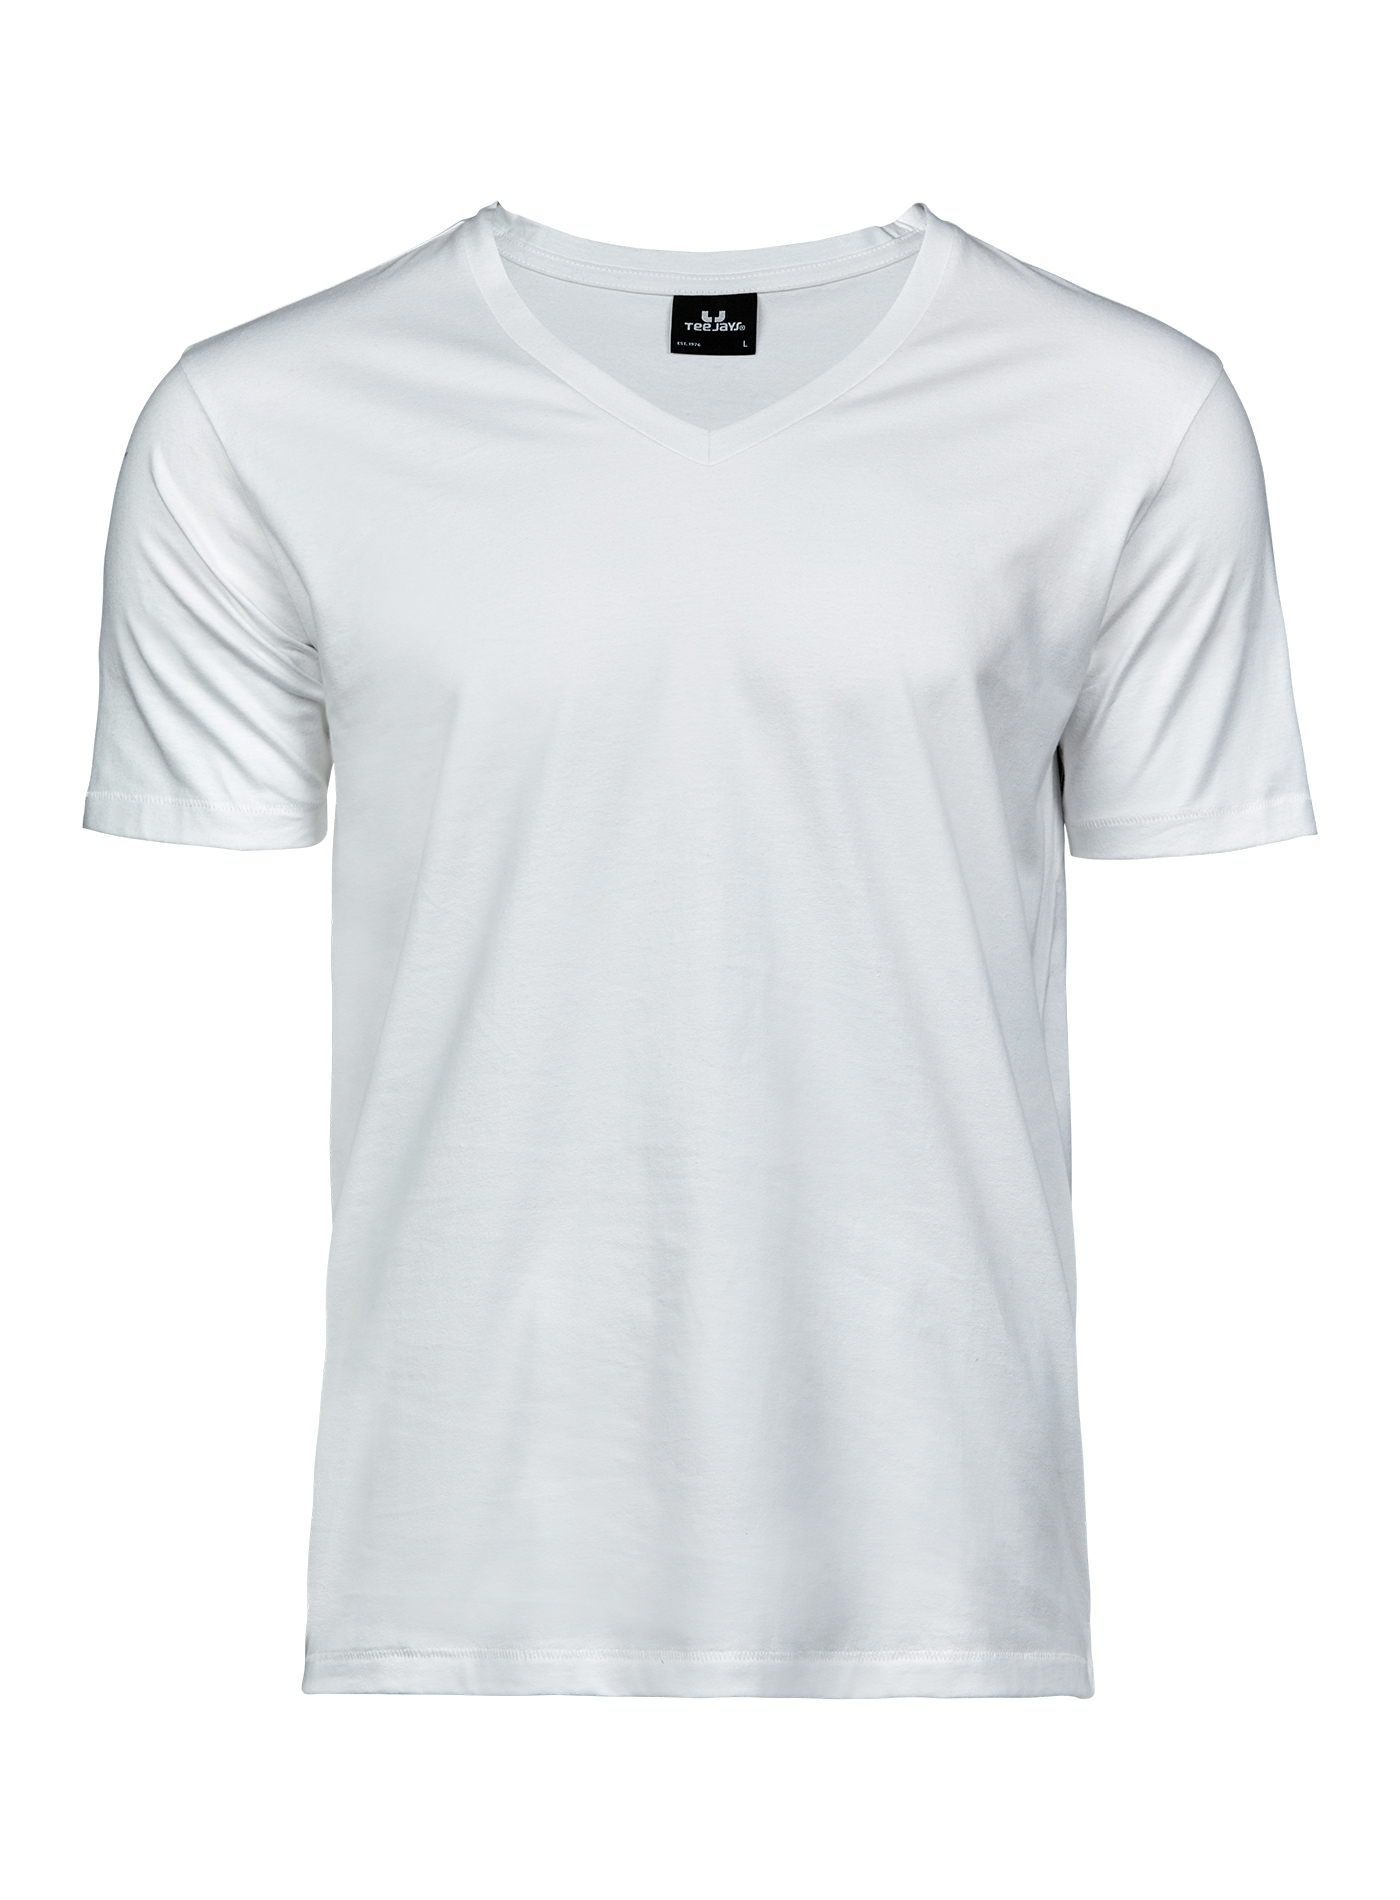 Pánské tričko s výstřihem do V Tee Jays - Bílá XL